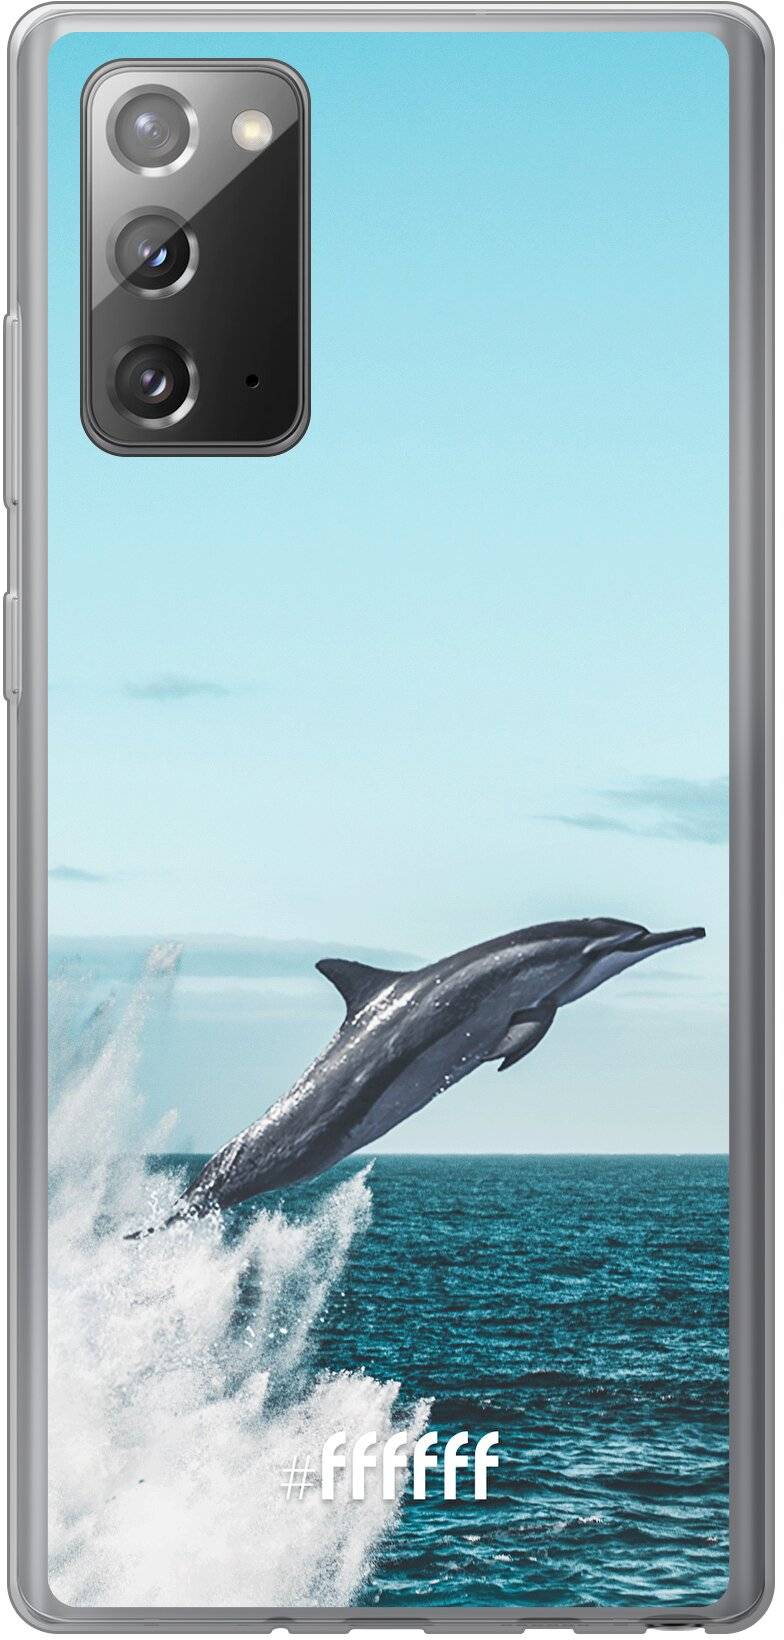 Dolphin Galaxy Note 20